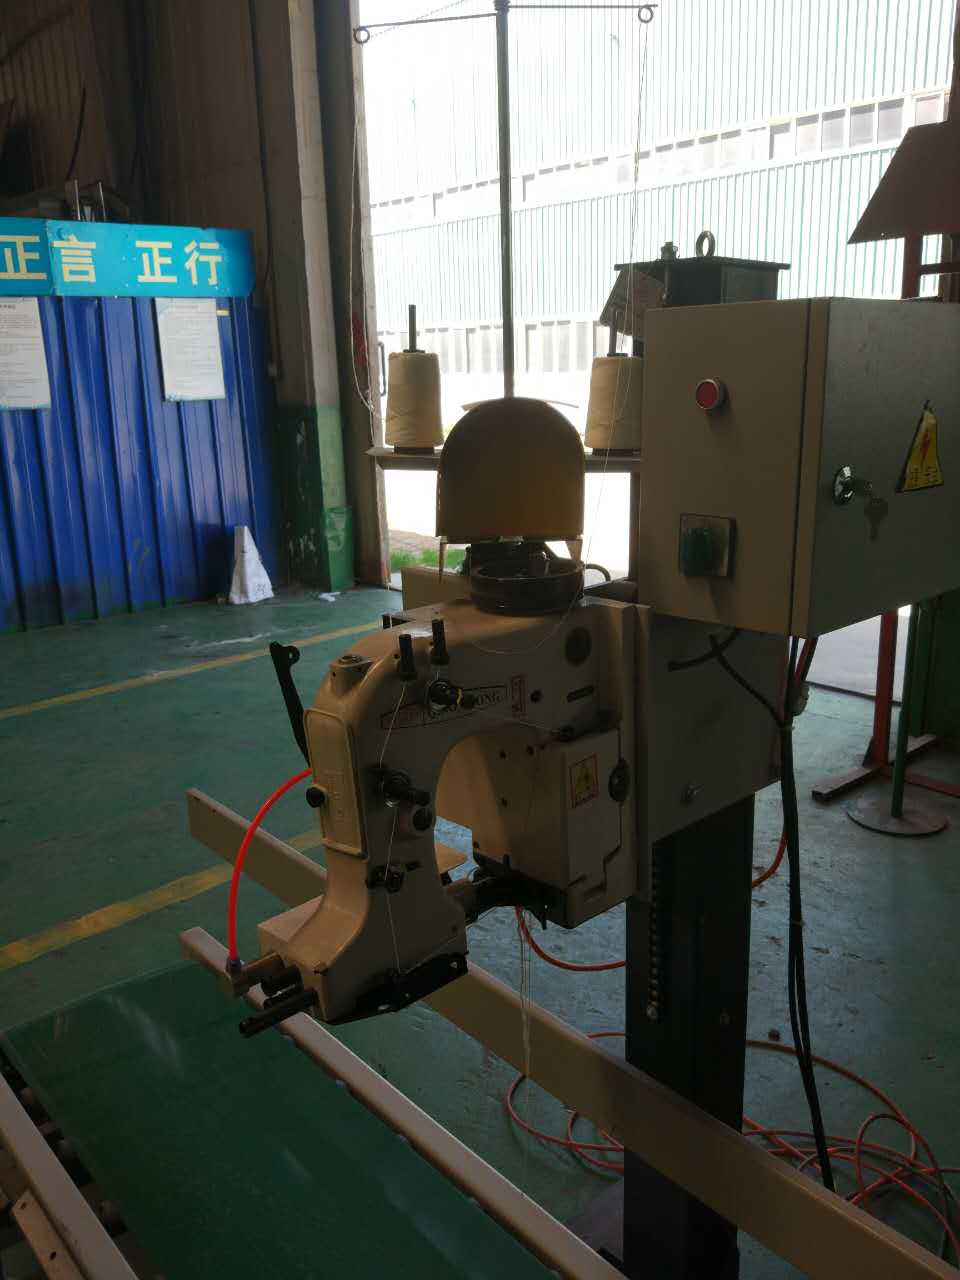 Automatic conveyor sewing machine